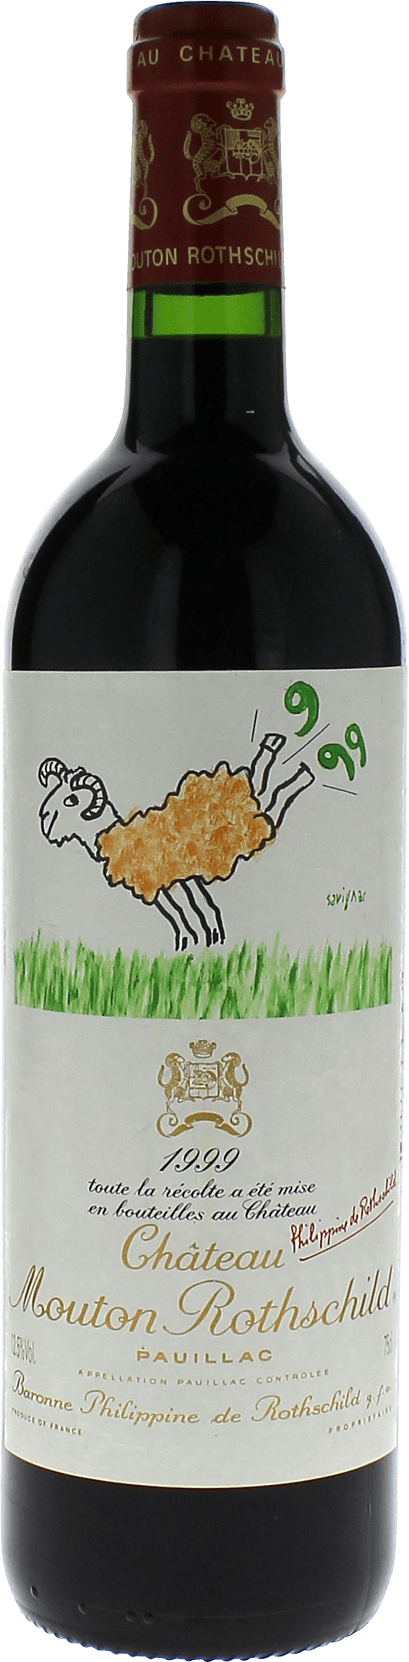 Mouton rothschild 1999 1er Grand cru class Pauillac, Bordeaux rouge